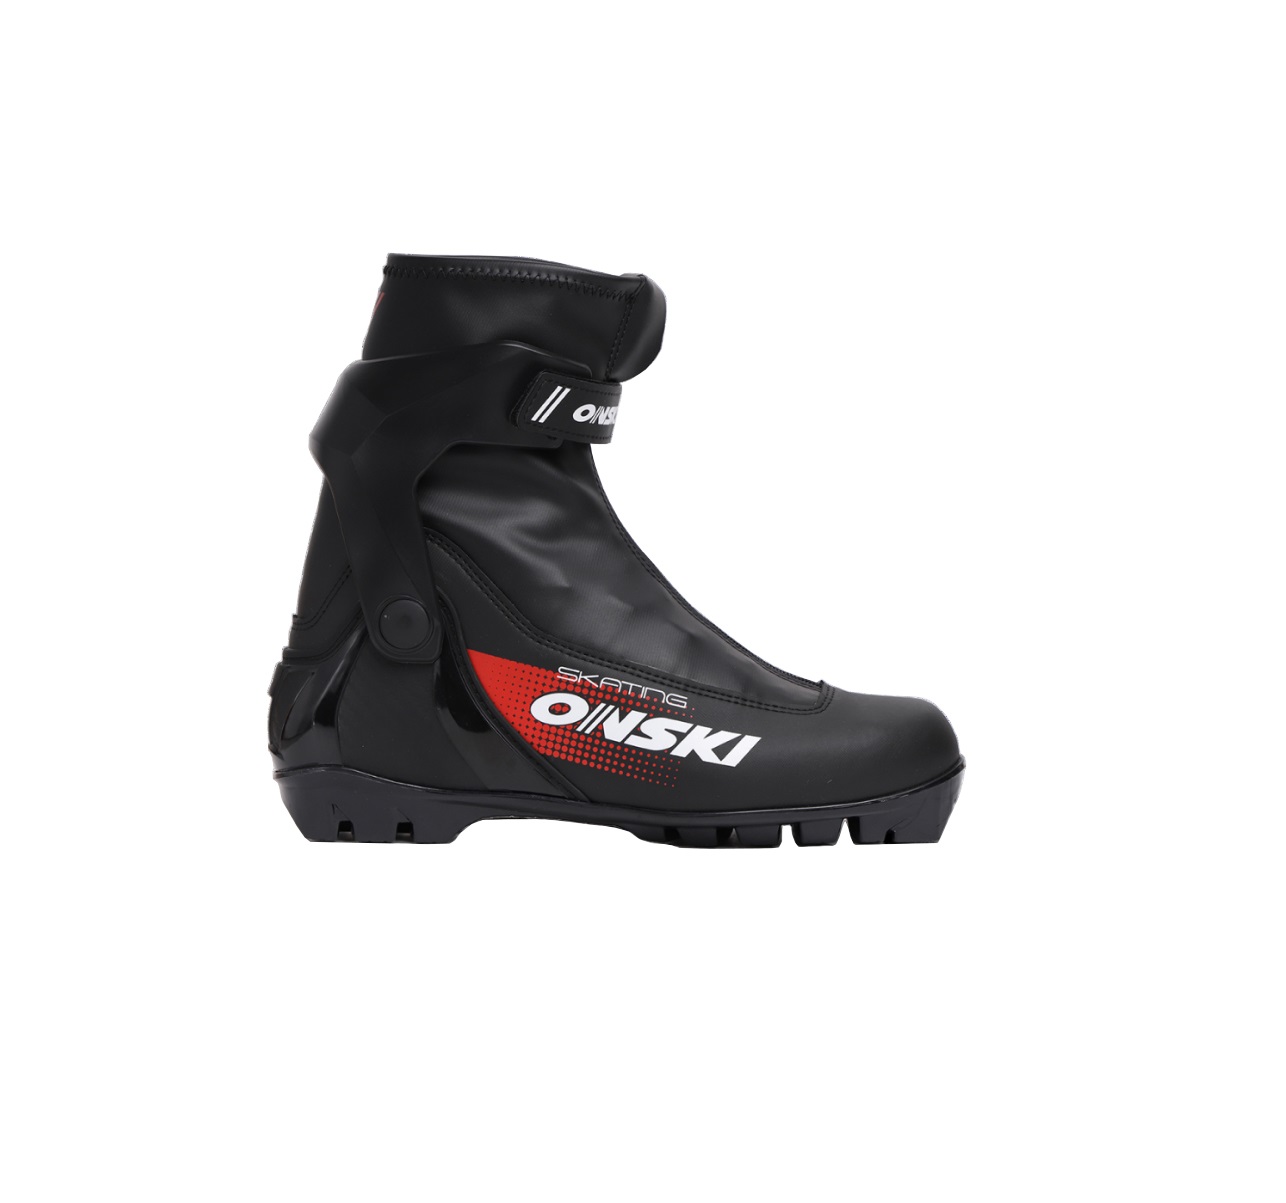 Ботинки лыжные ONSKI Skate NNN